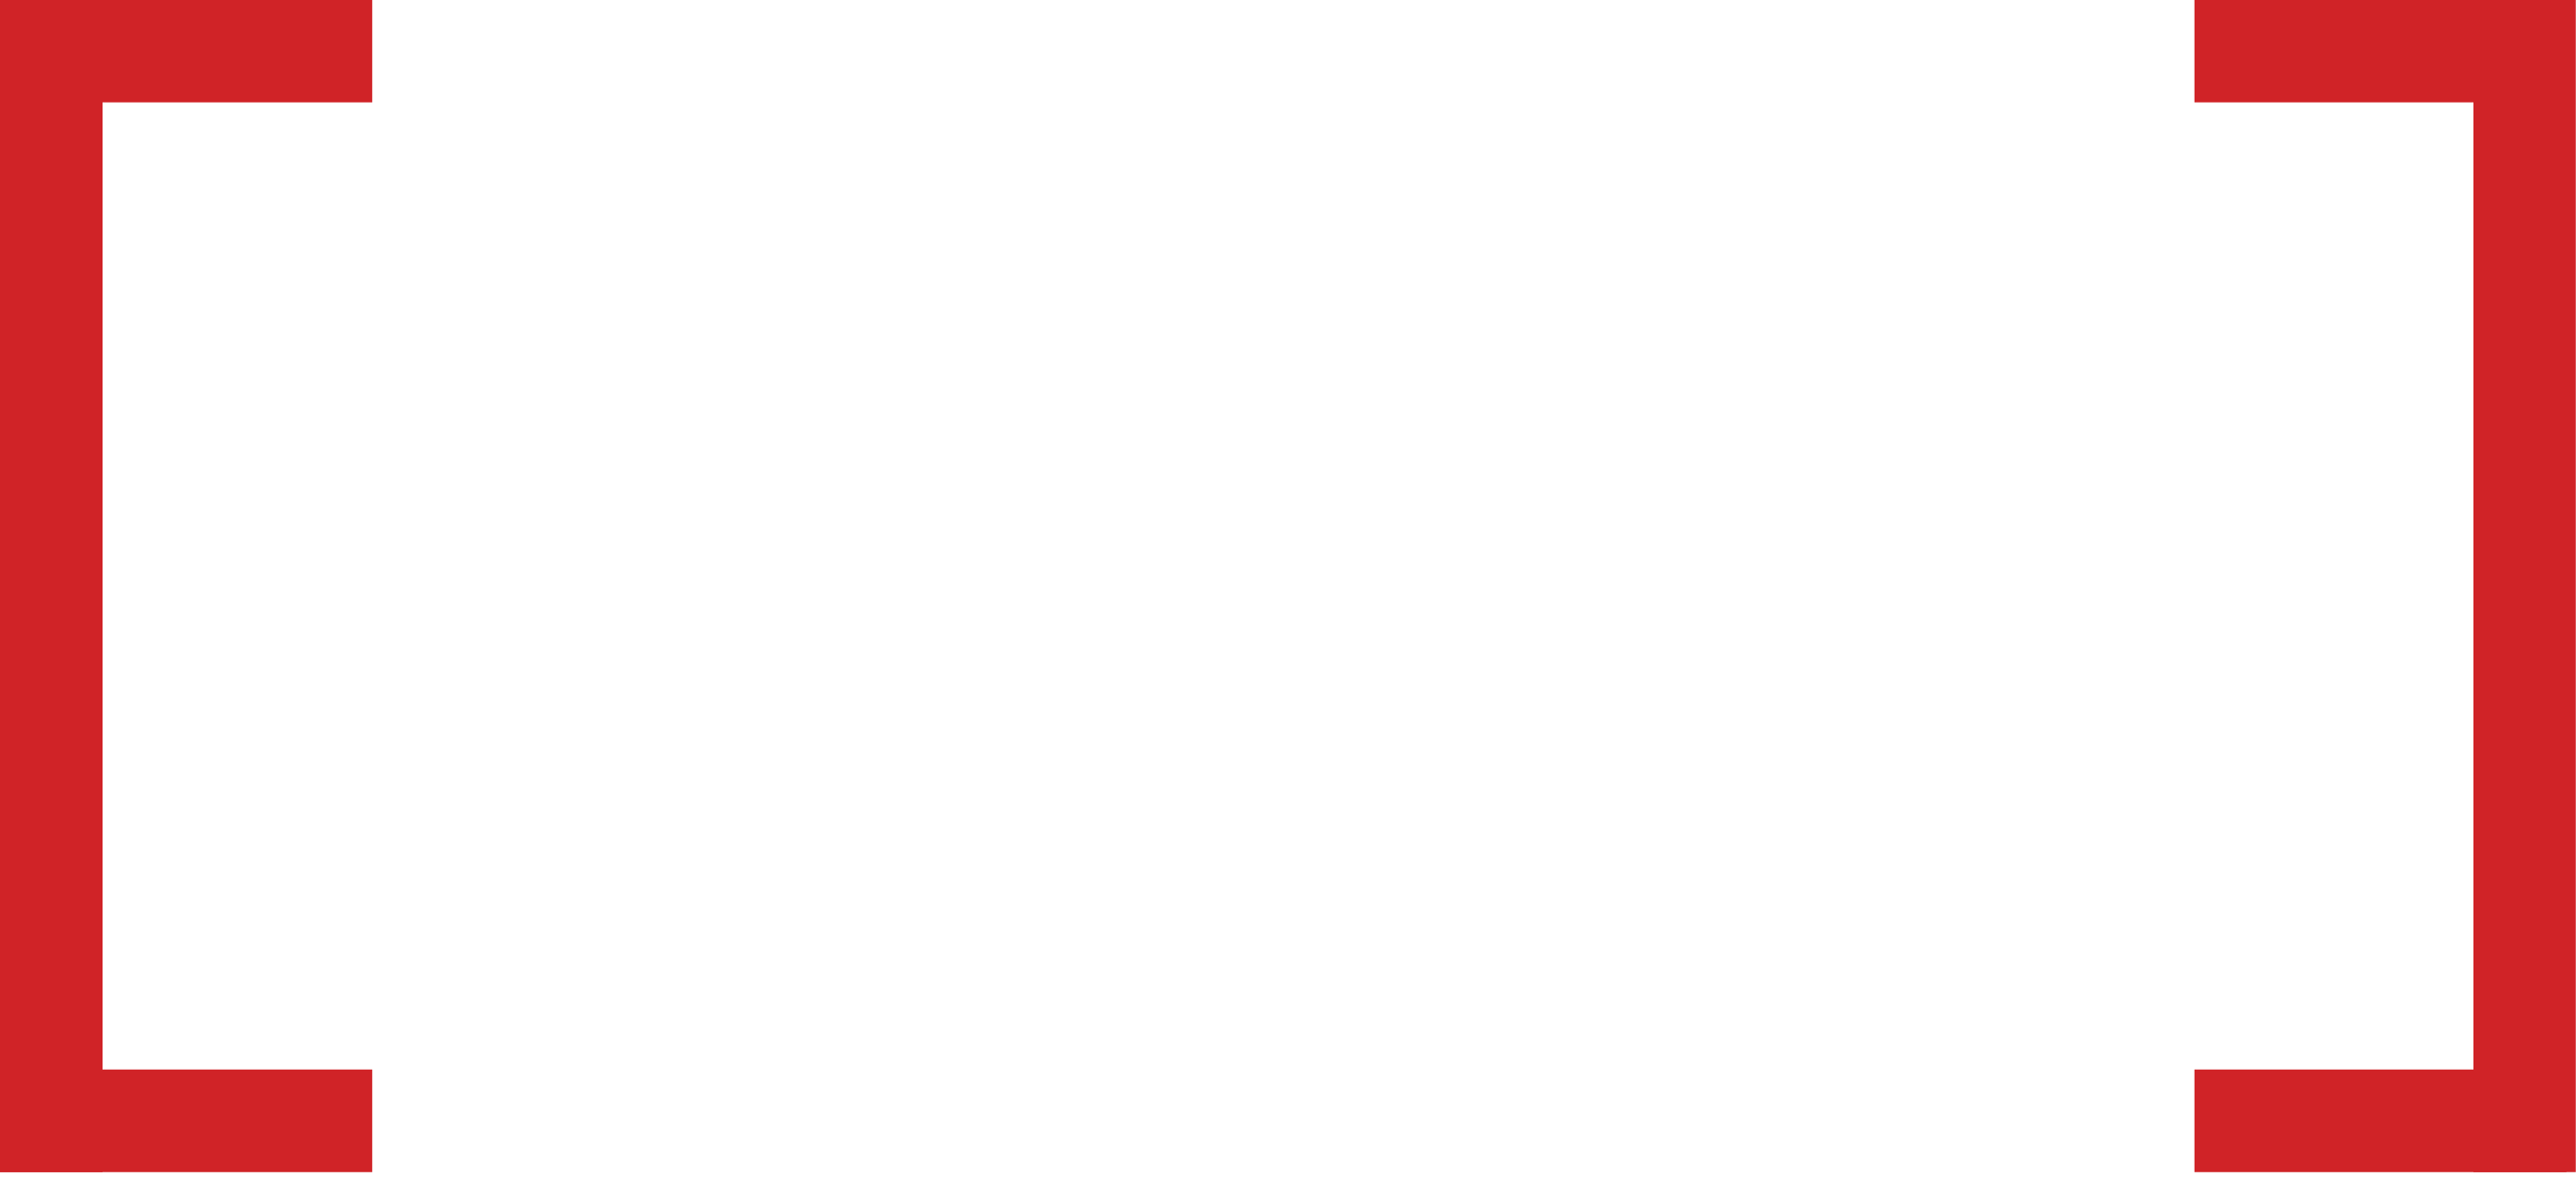 CVT Indonesia